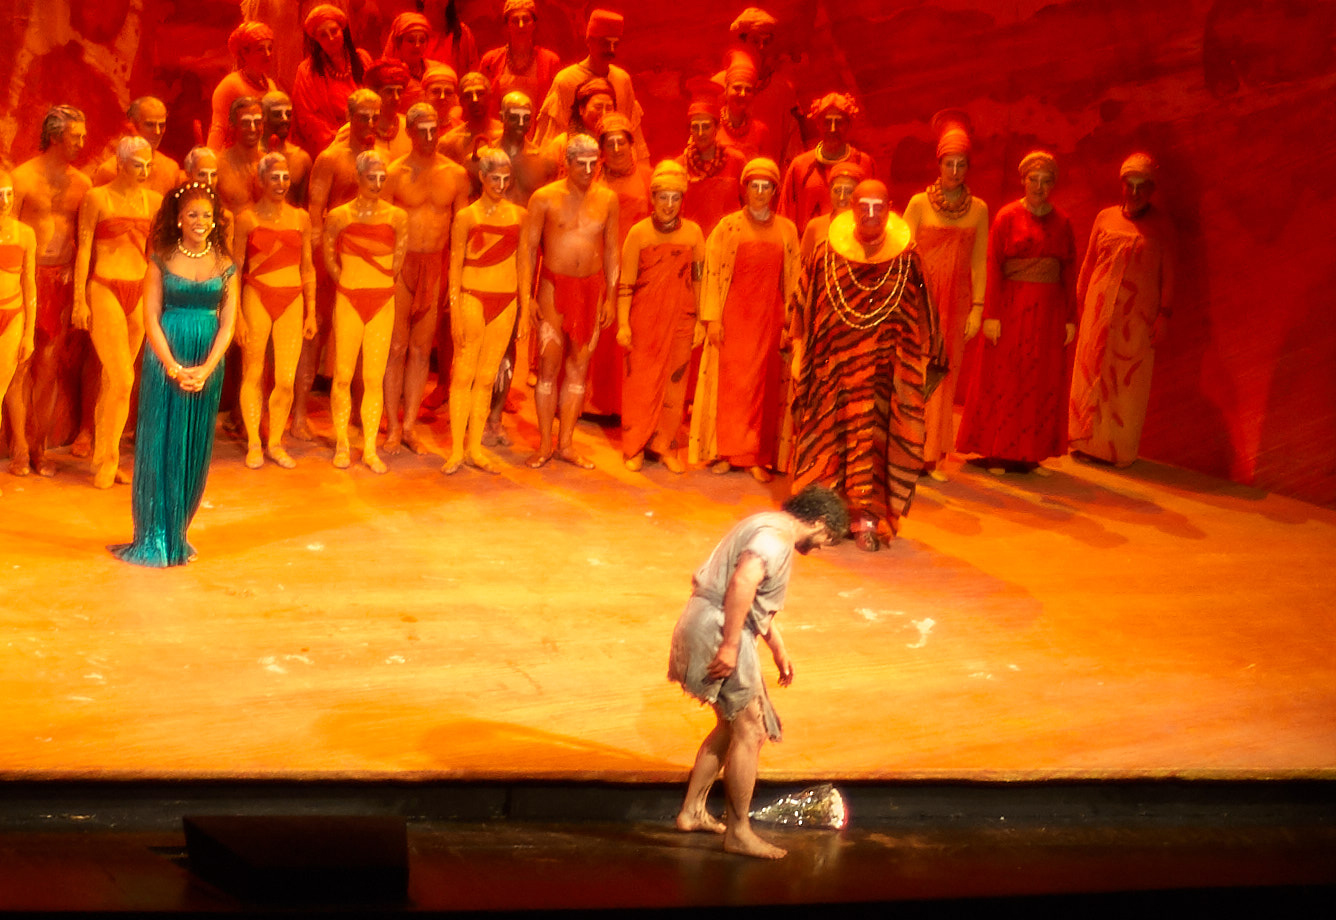 Jos Cura at curtain call after Samson et Dalila at the Met, 2005